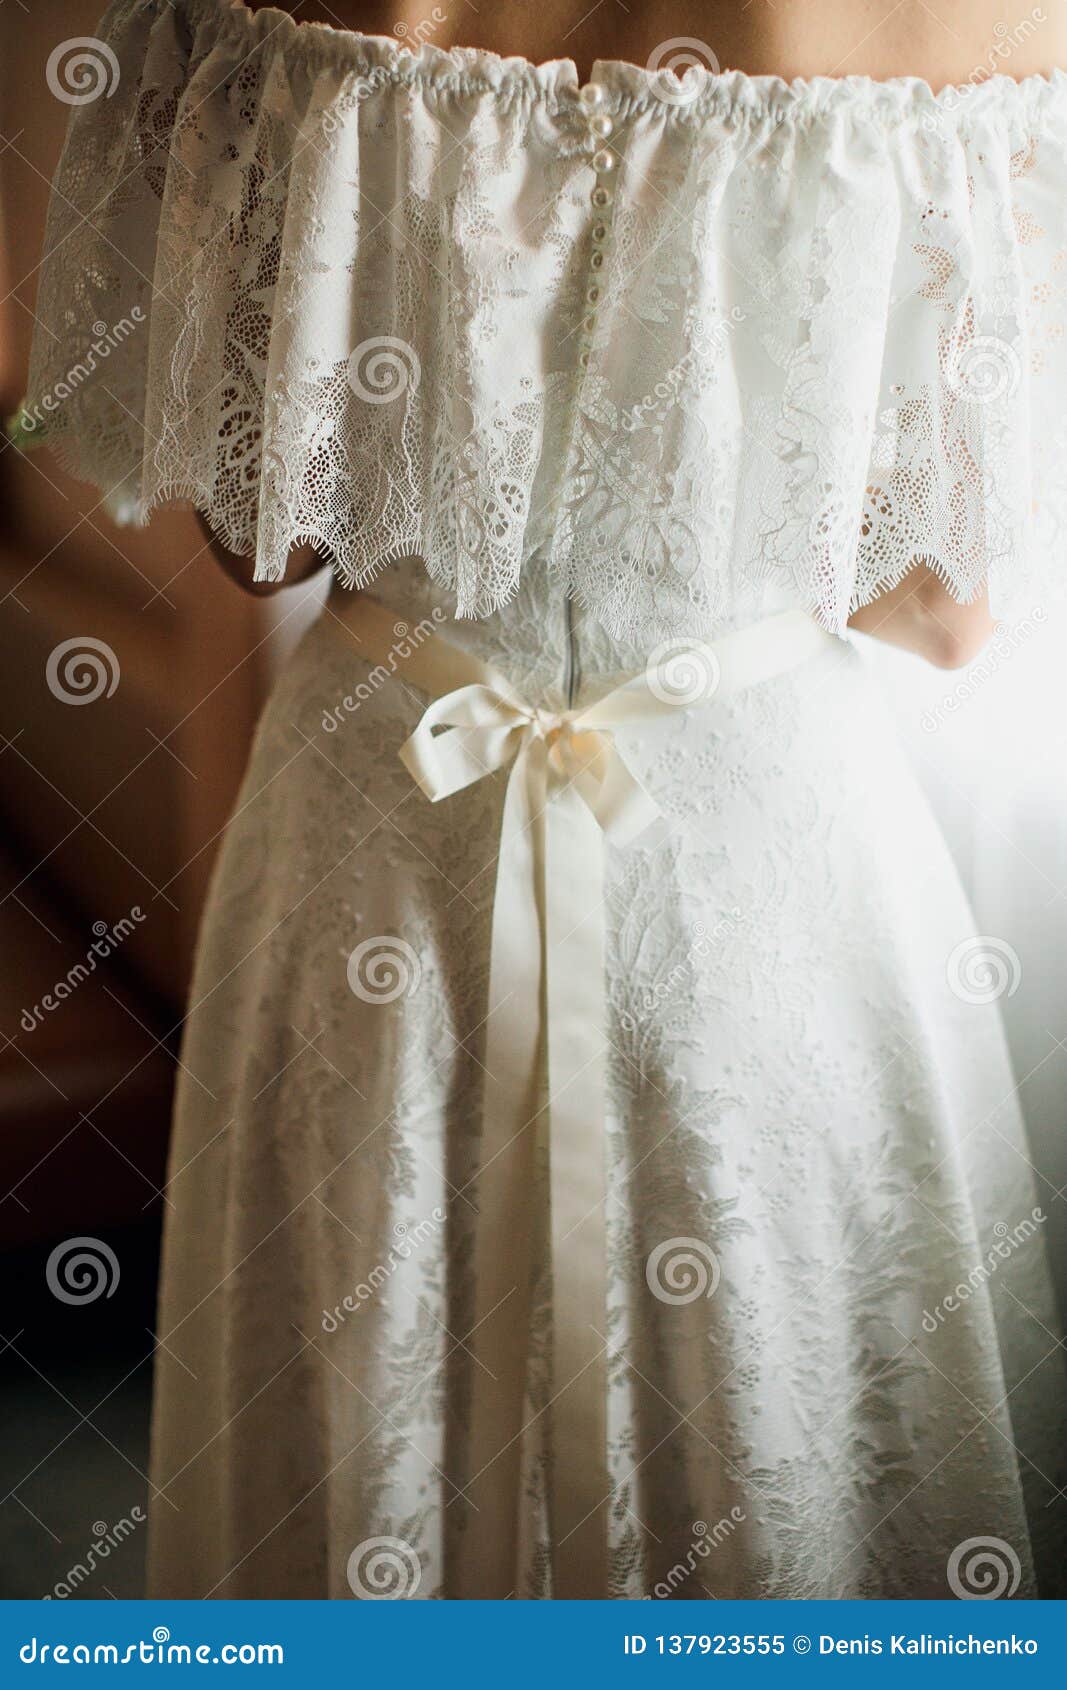 Wedding dress close up stock image. Image of ceremony - 137923555